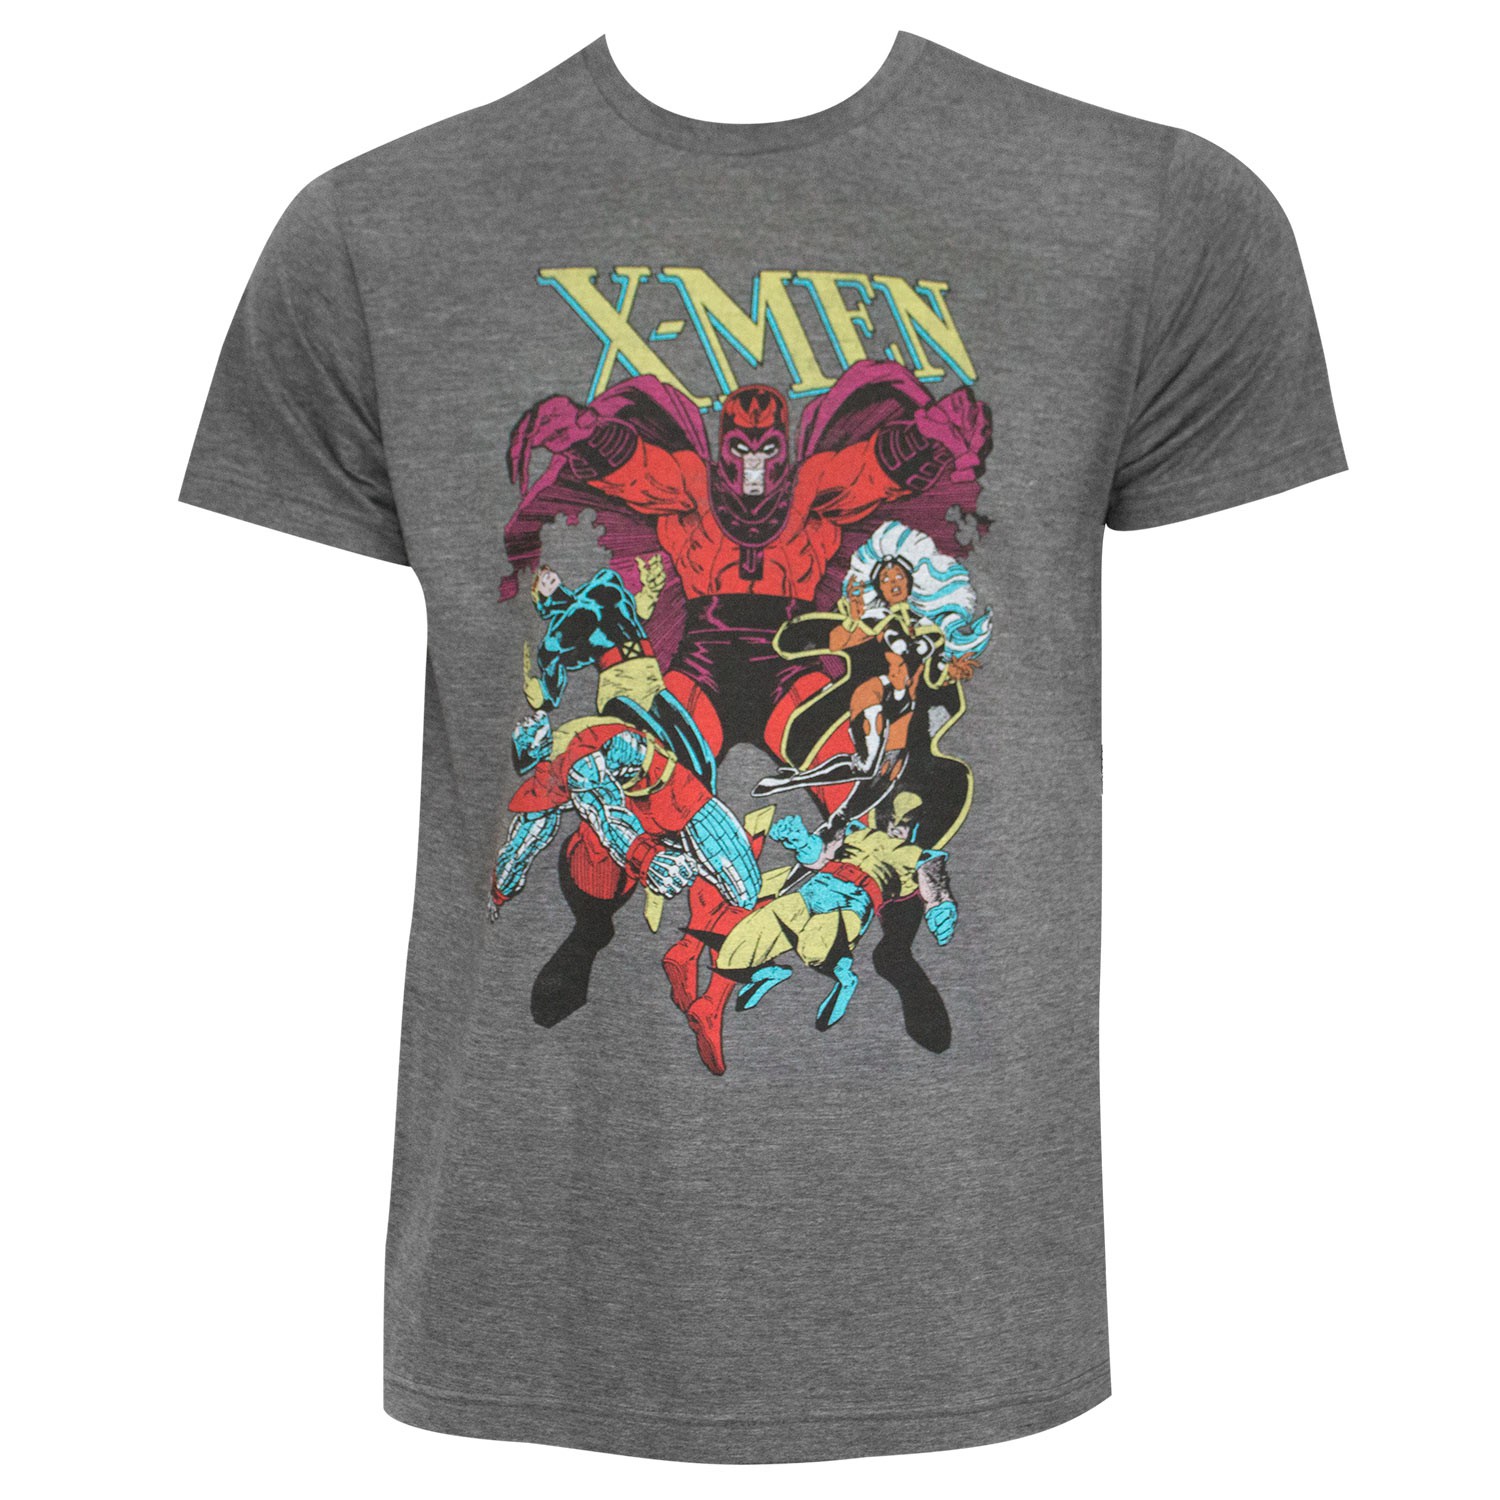 X-Men Magneto's Wrath Tee Shirt